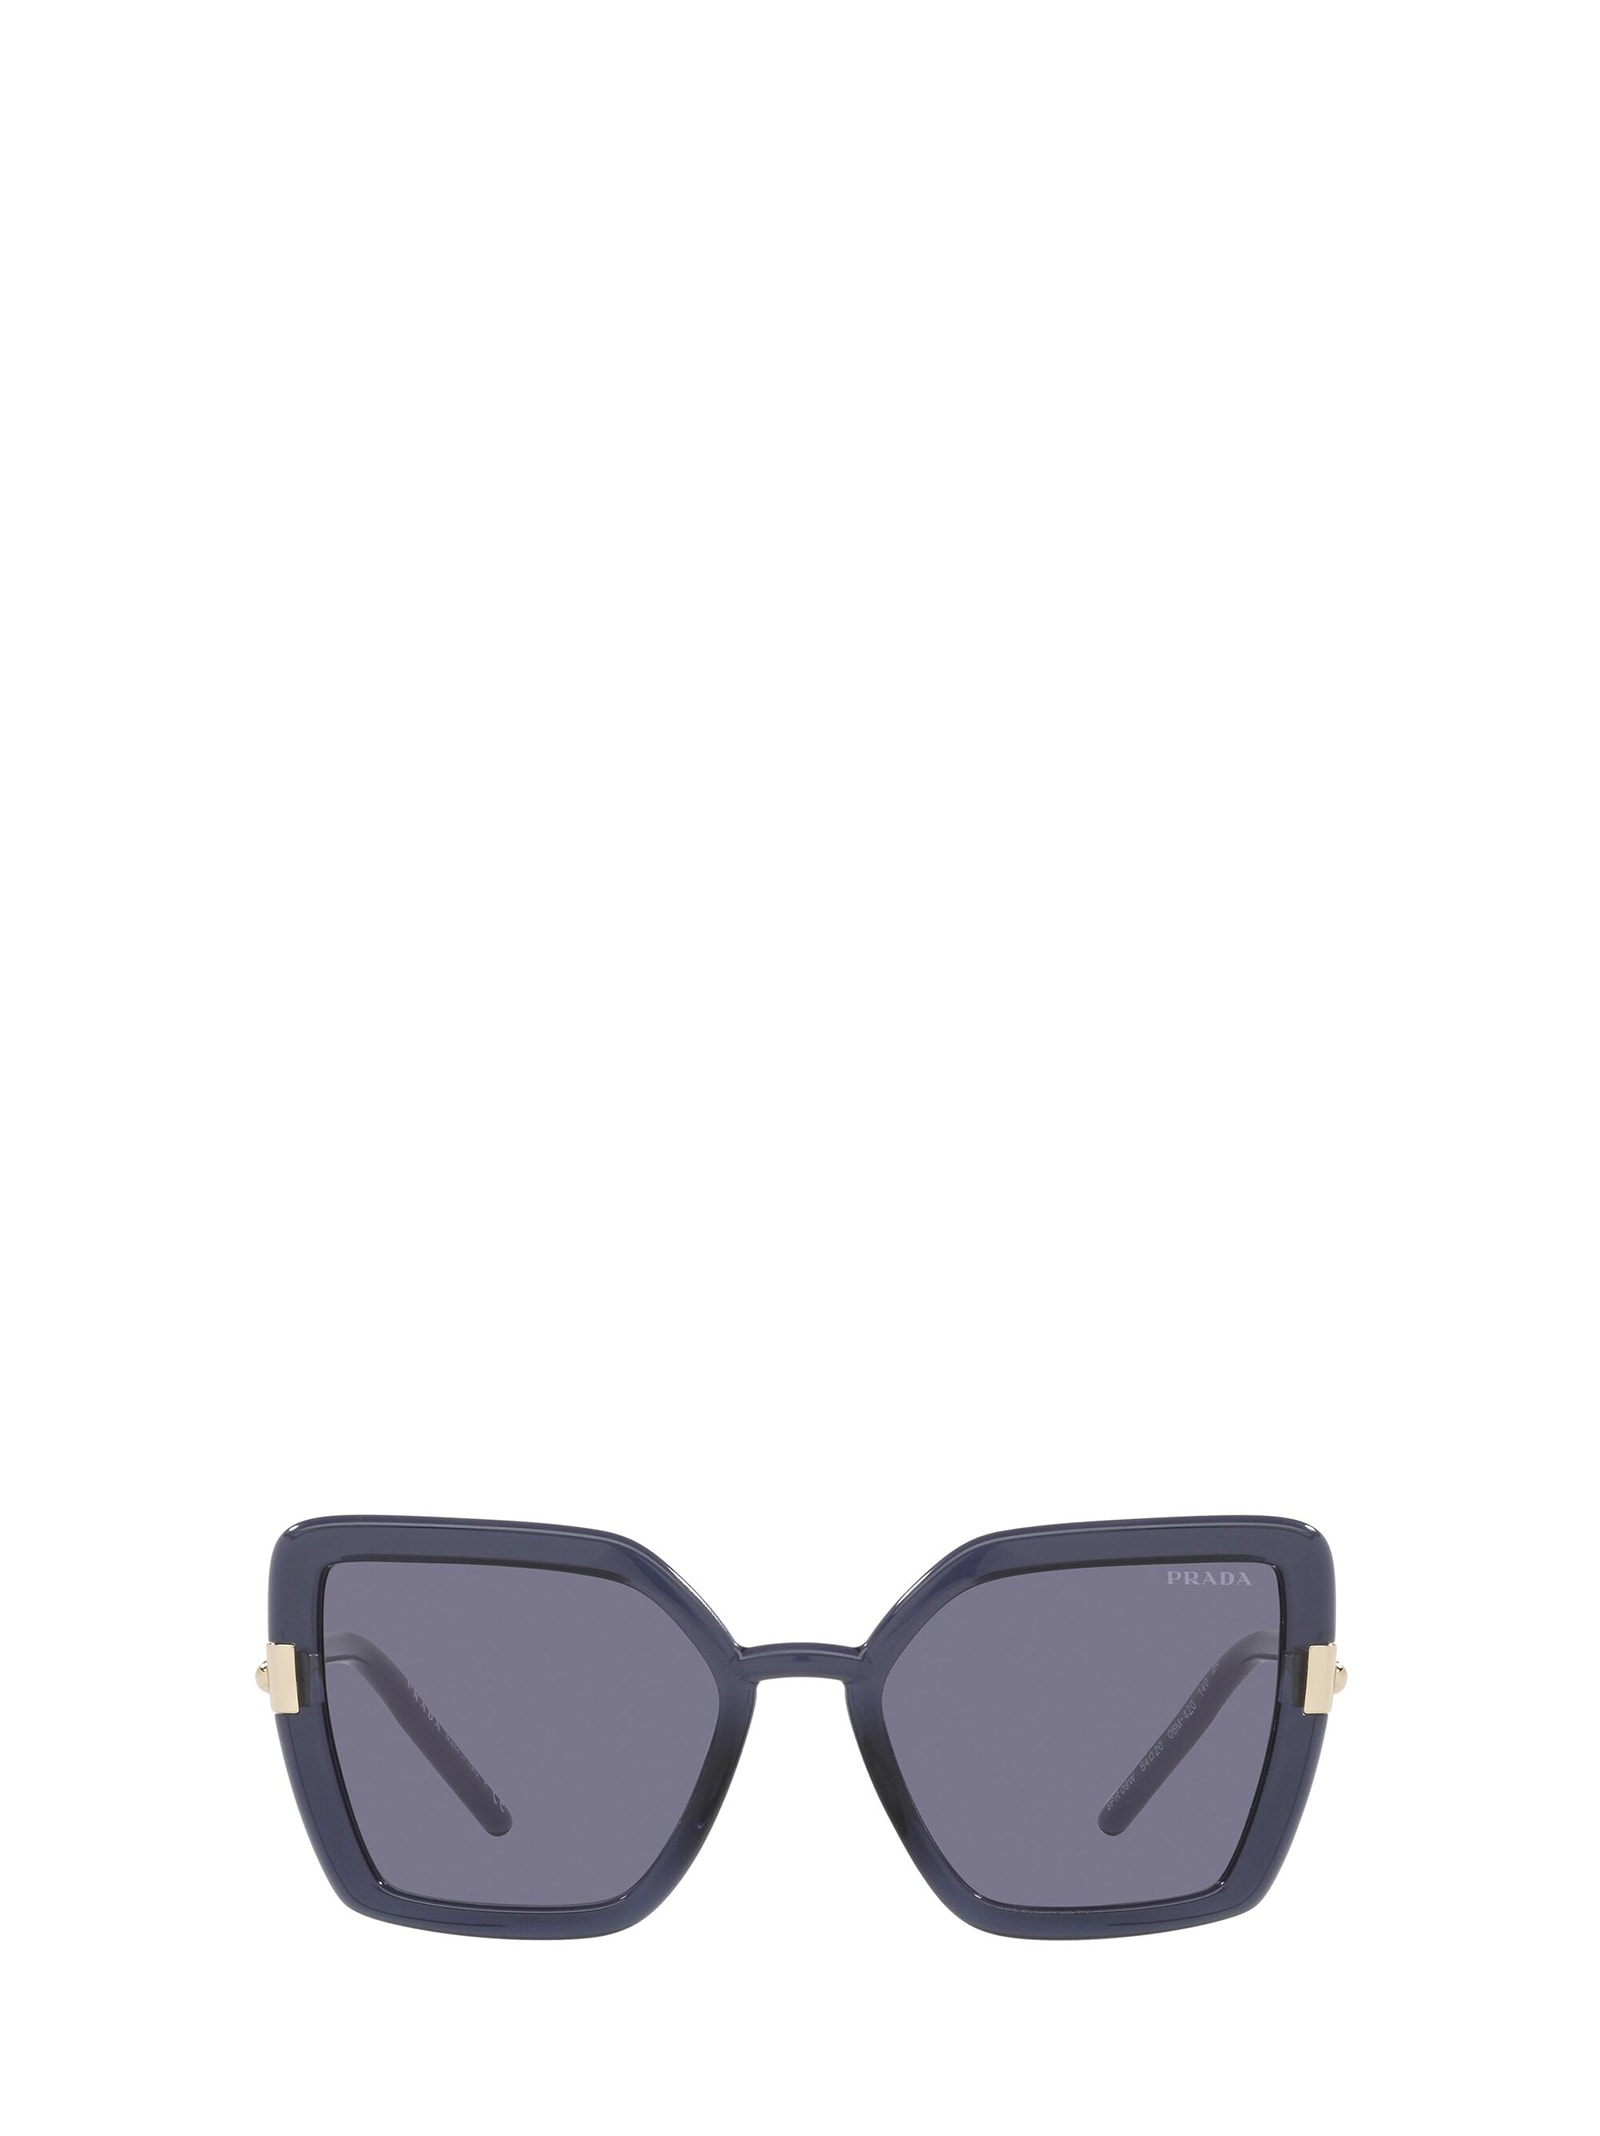 Prada Eyewear Prada Pr 09ws Crystal Bluette Sunglasses